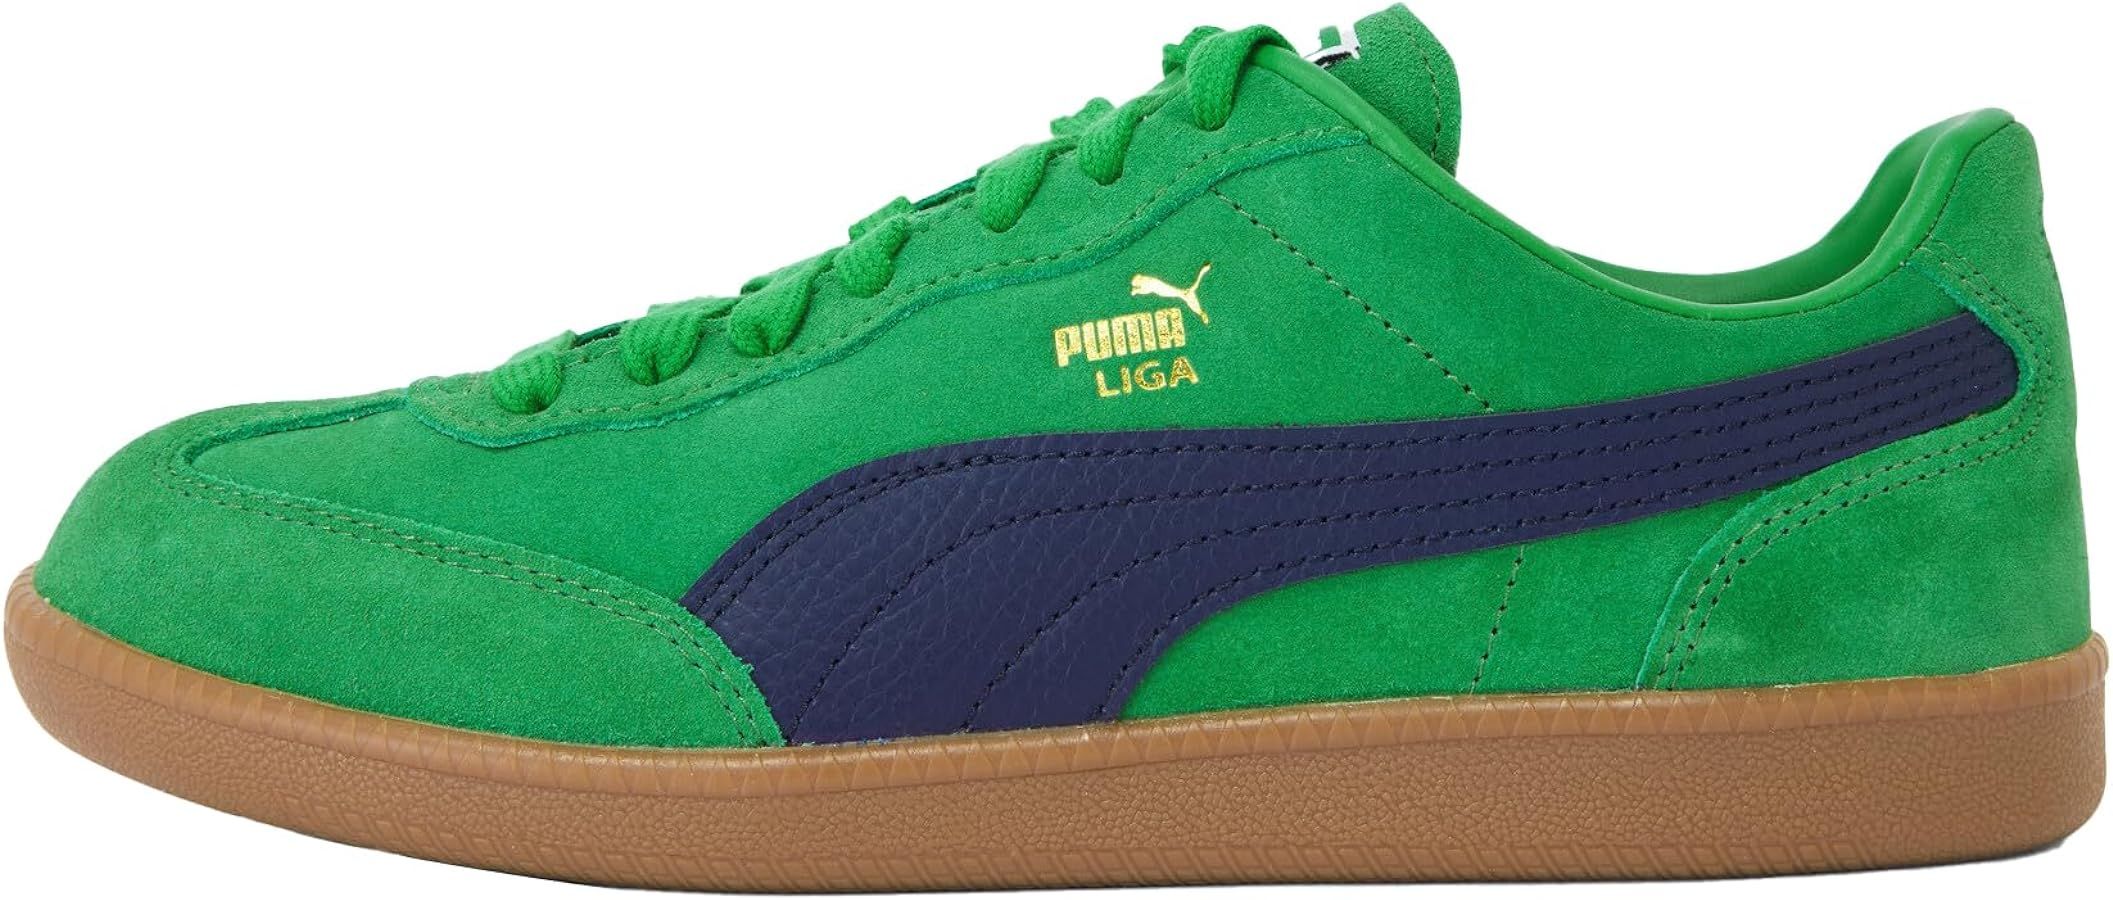 PUMA Liga Suede Leather Unisex Trainers Sneakers | Amazon (UK)